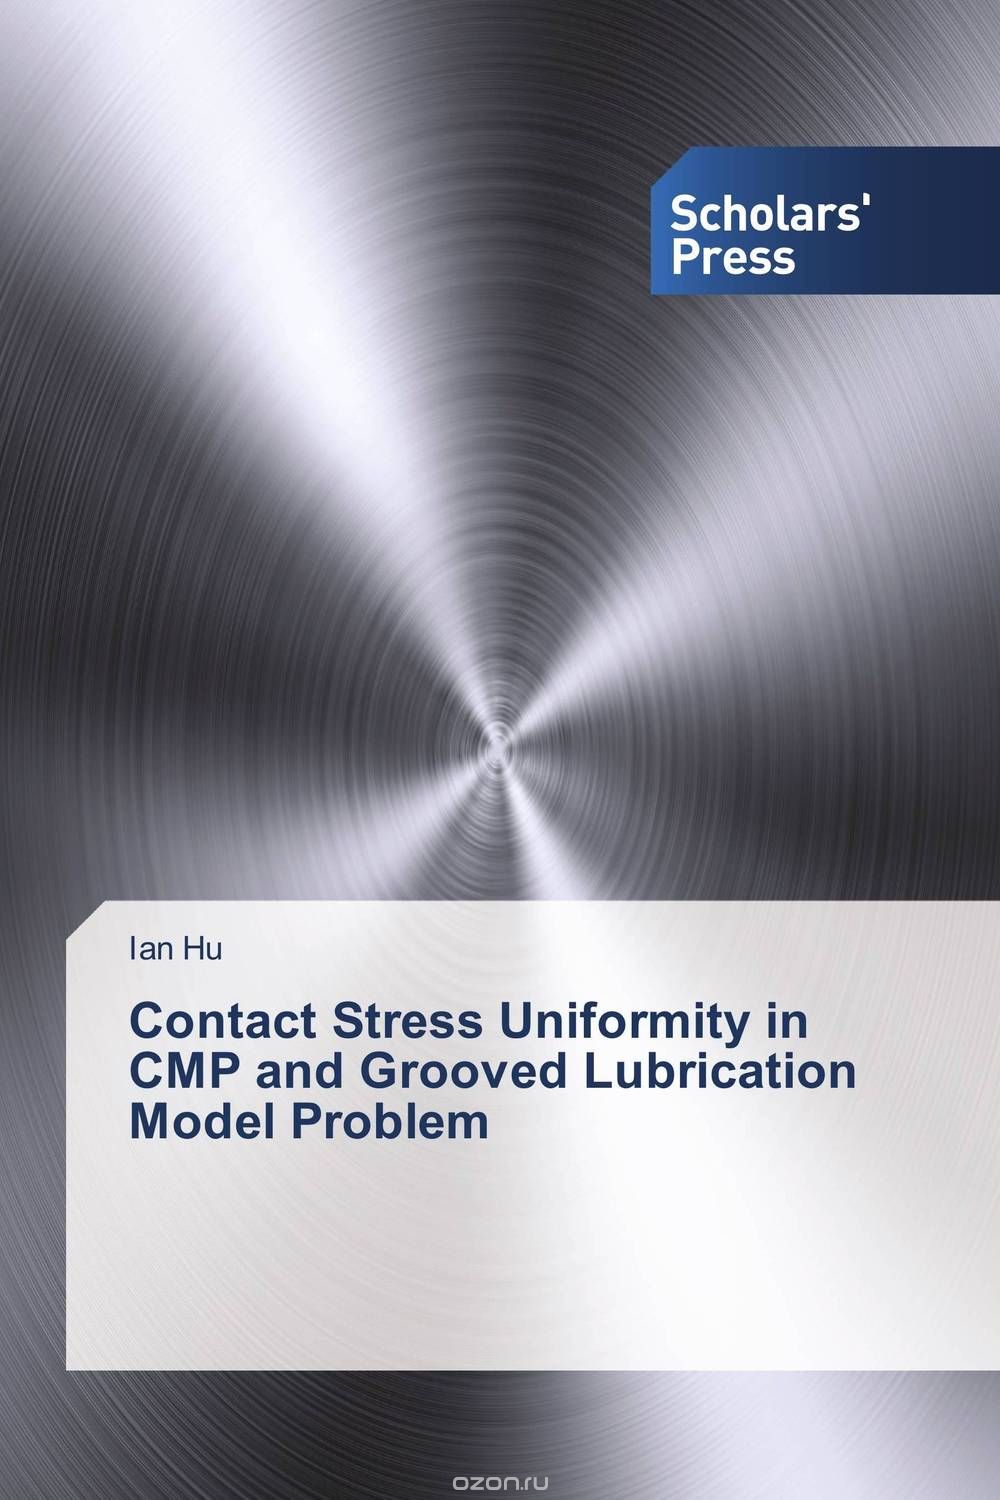 Скачать книгу "Contact Stress Uniformity in CMP and Grooved Lubrication Model Problem"